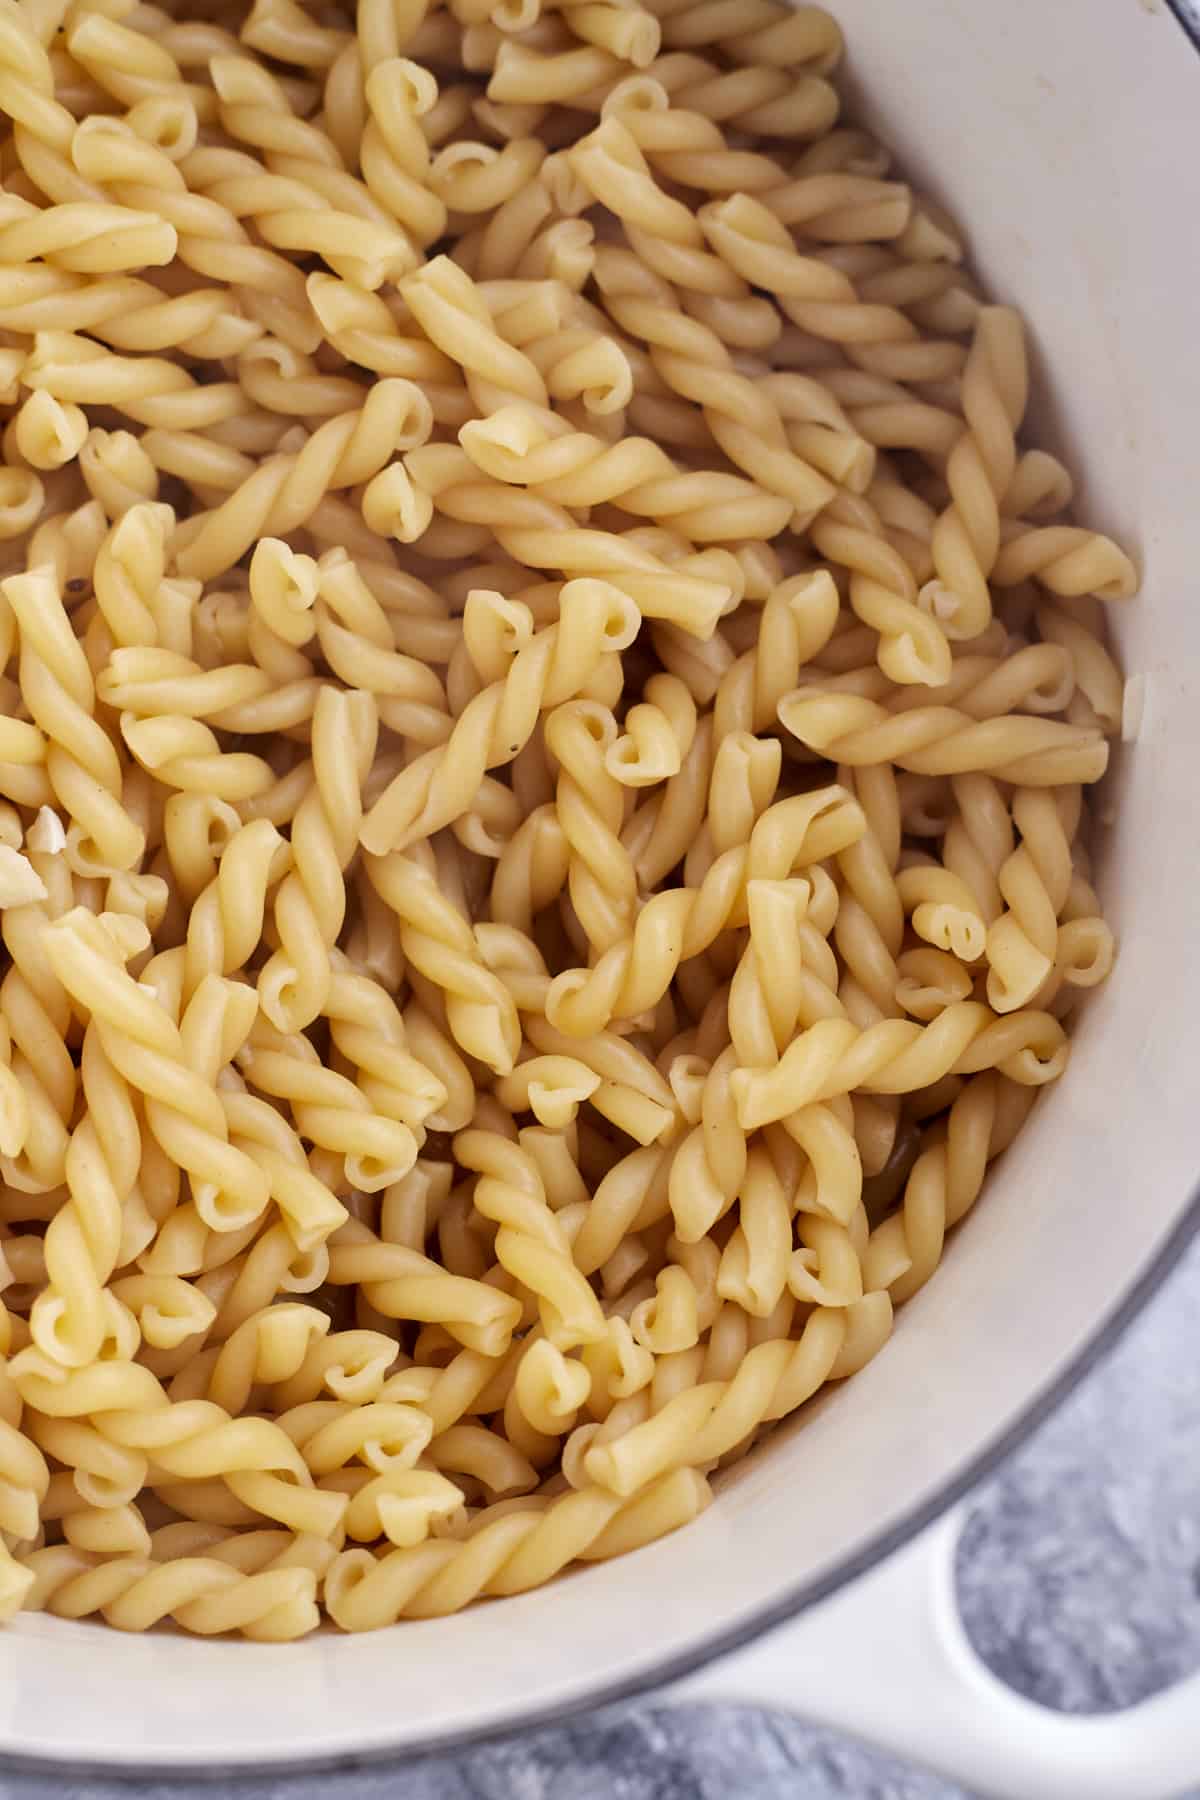 uncooked pasta noodles in a pot